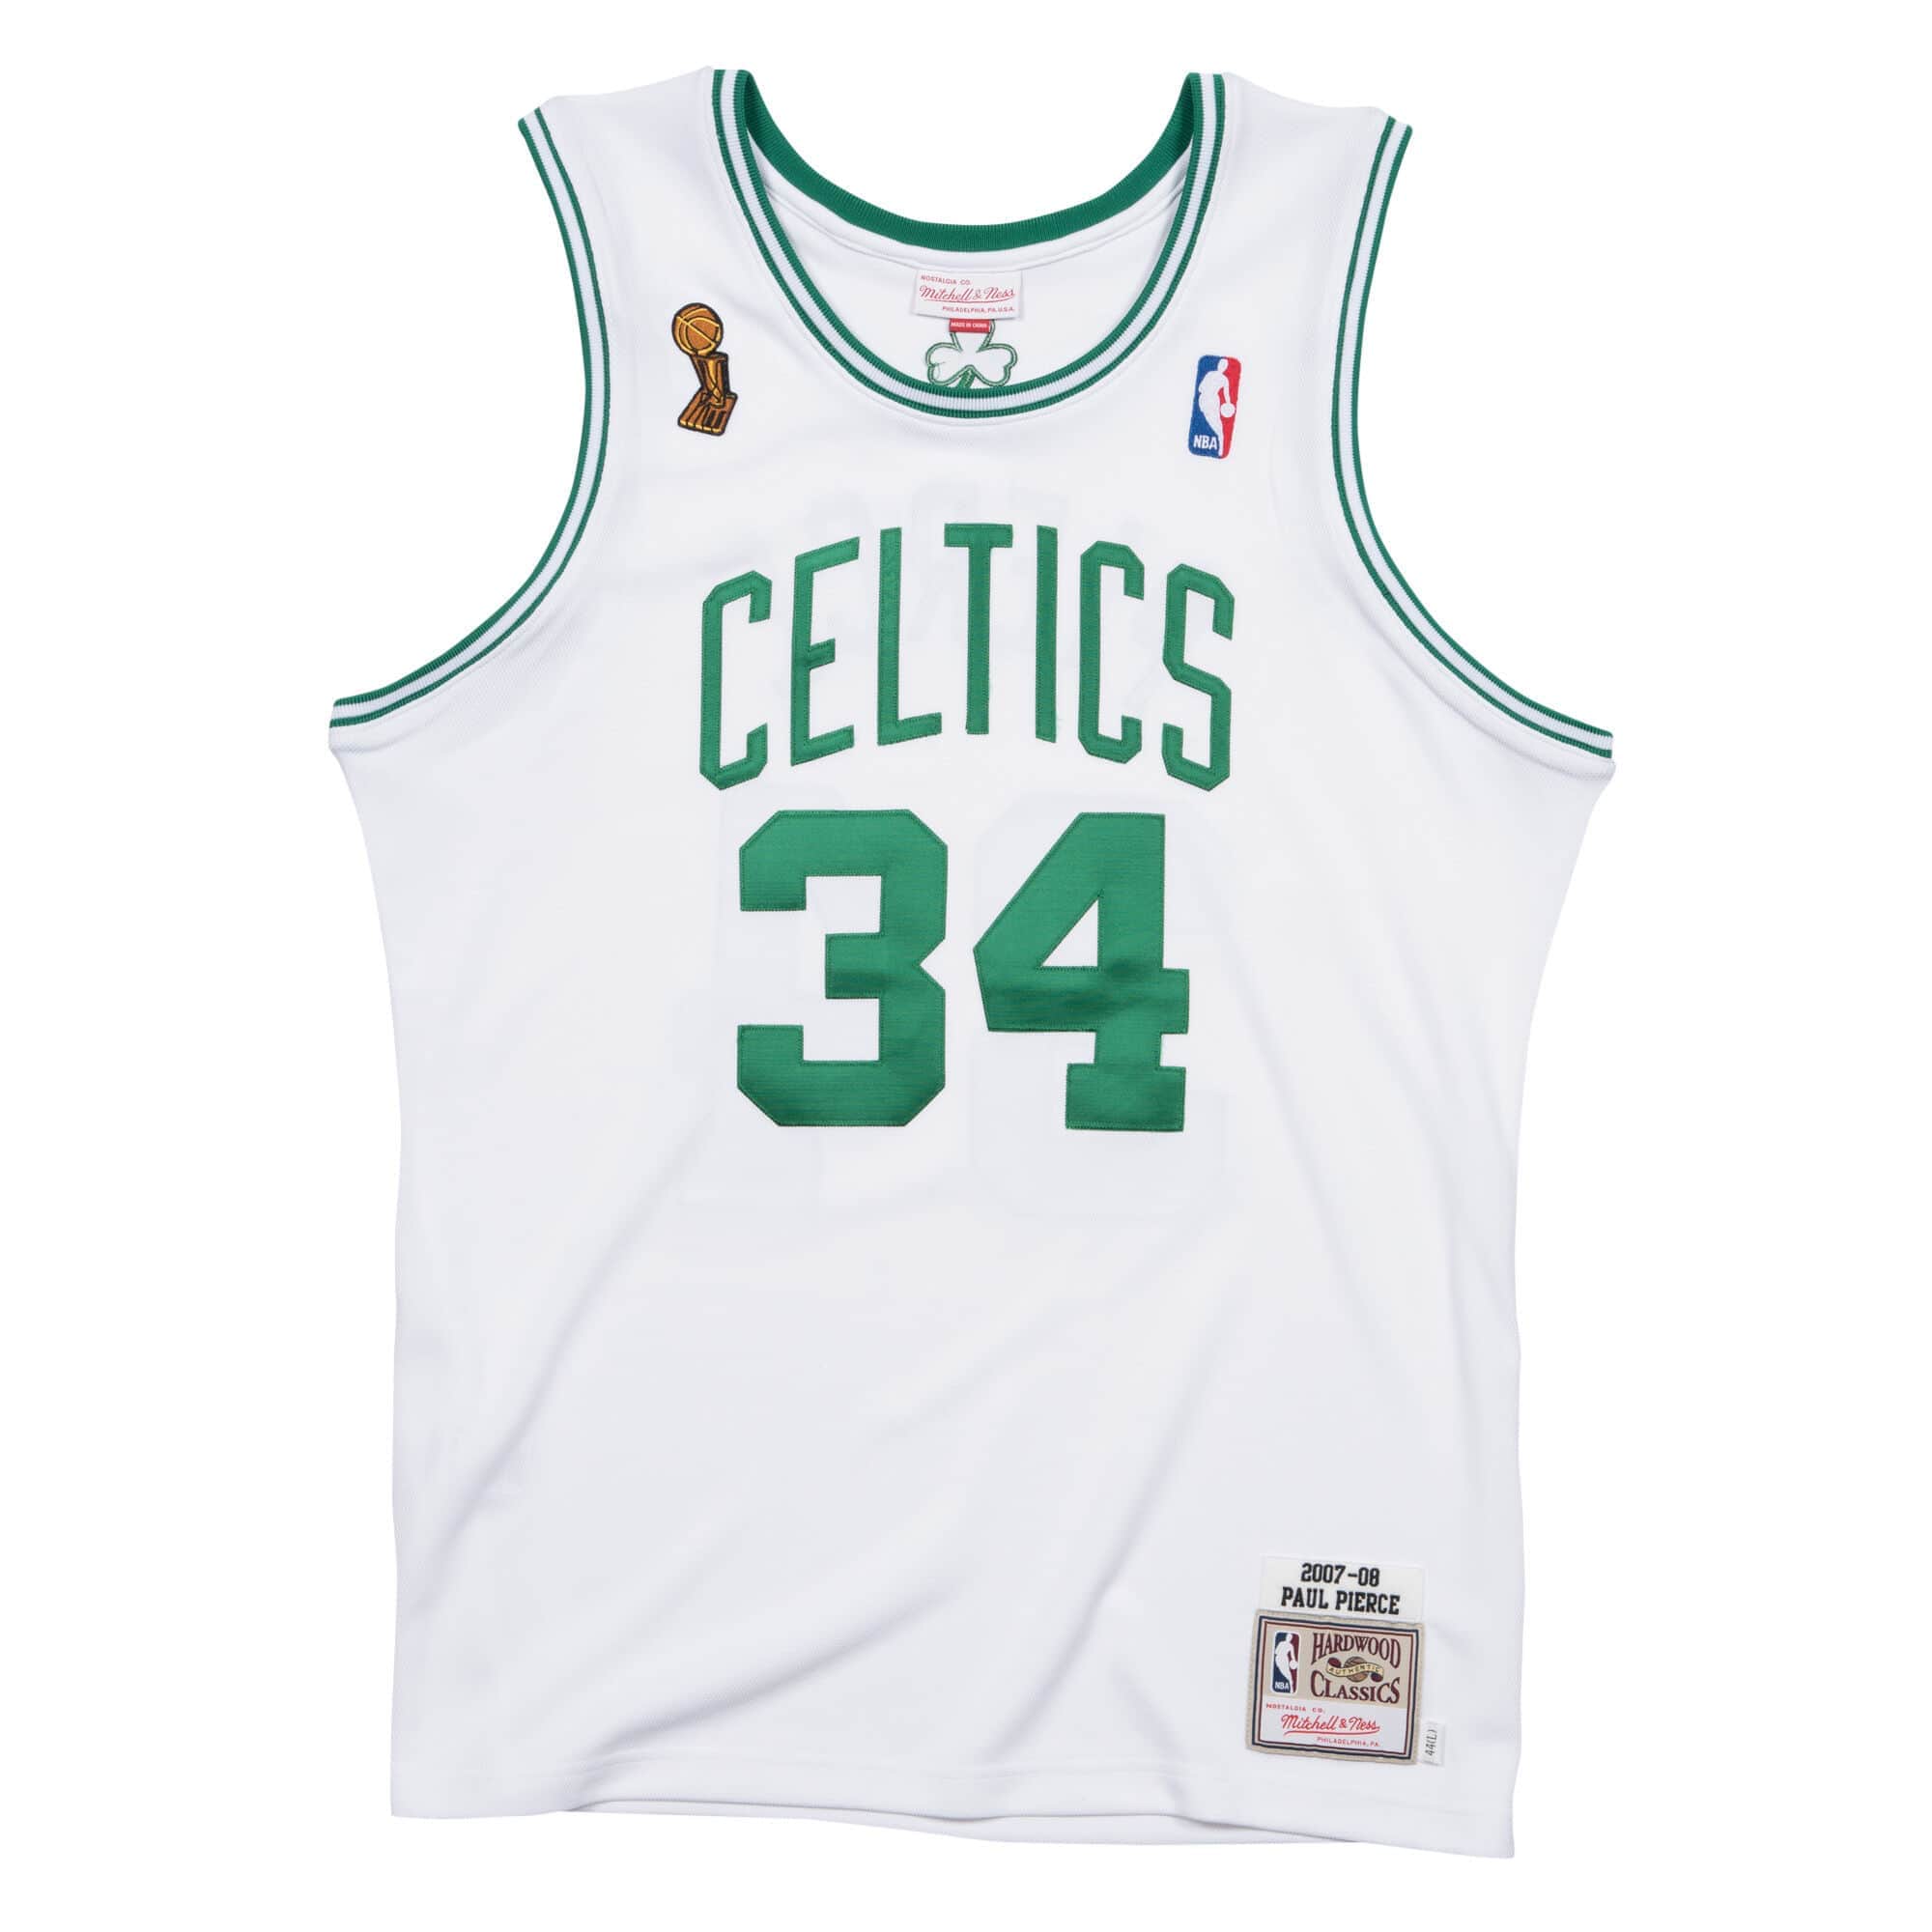 Paul Pierce 2007-08 Boston Celtics Finals Jersey